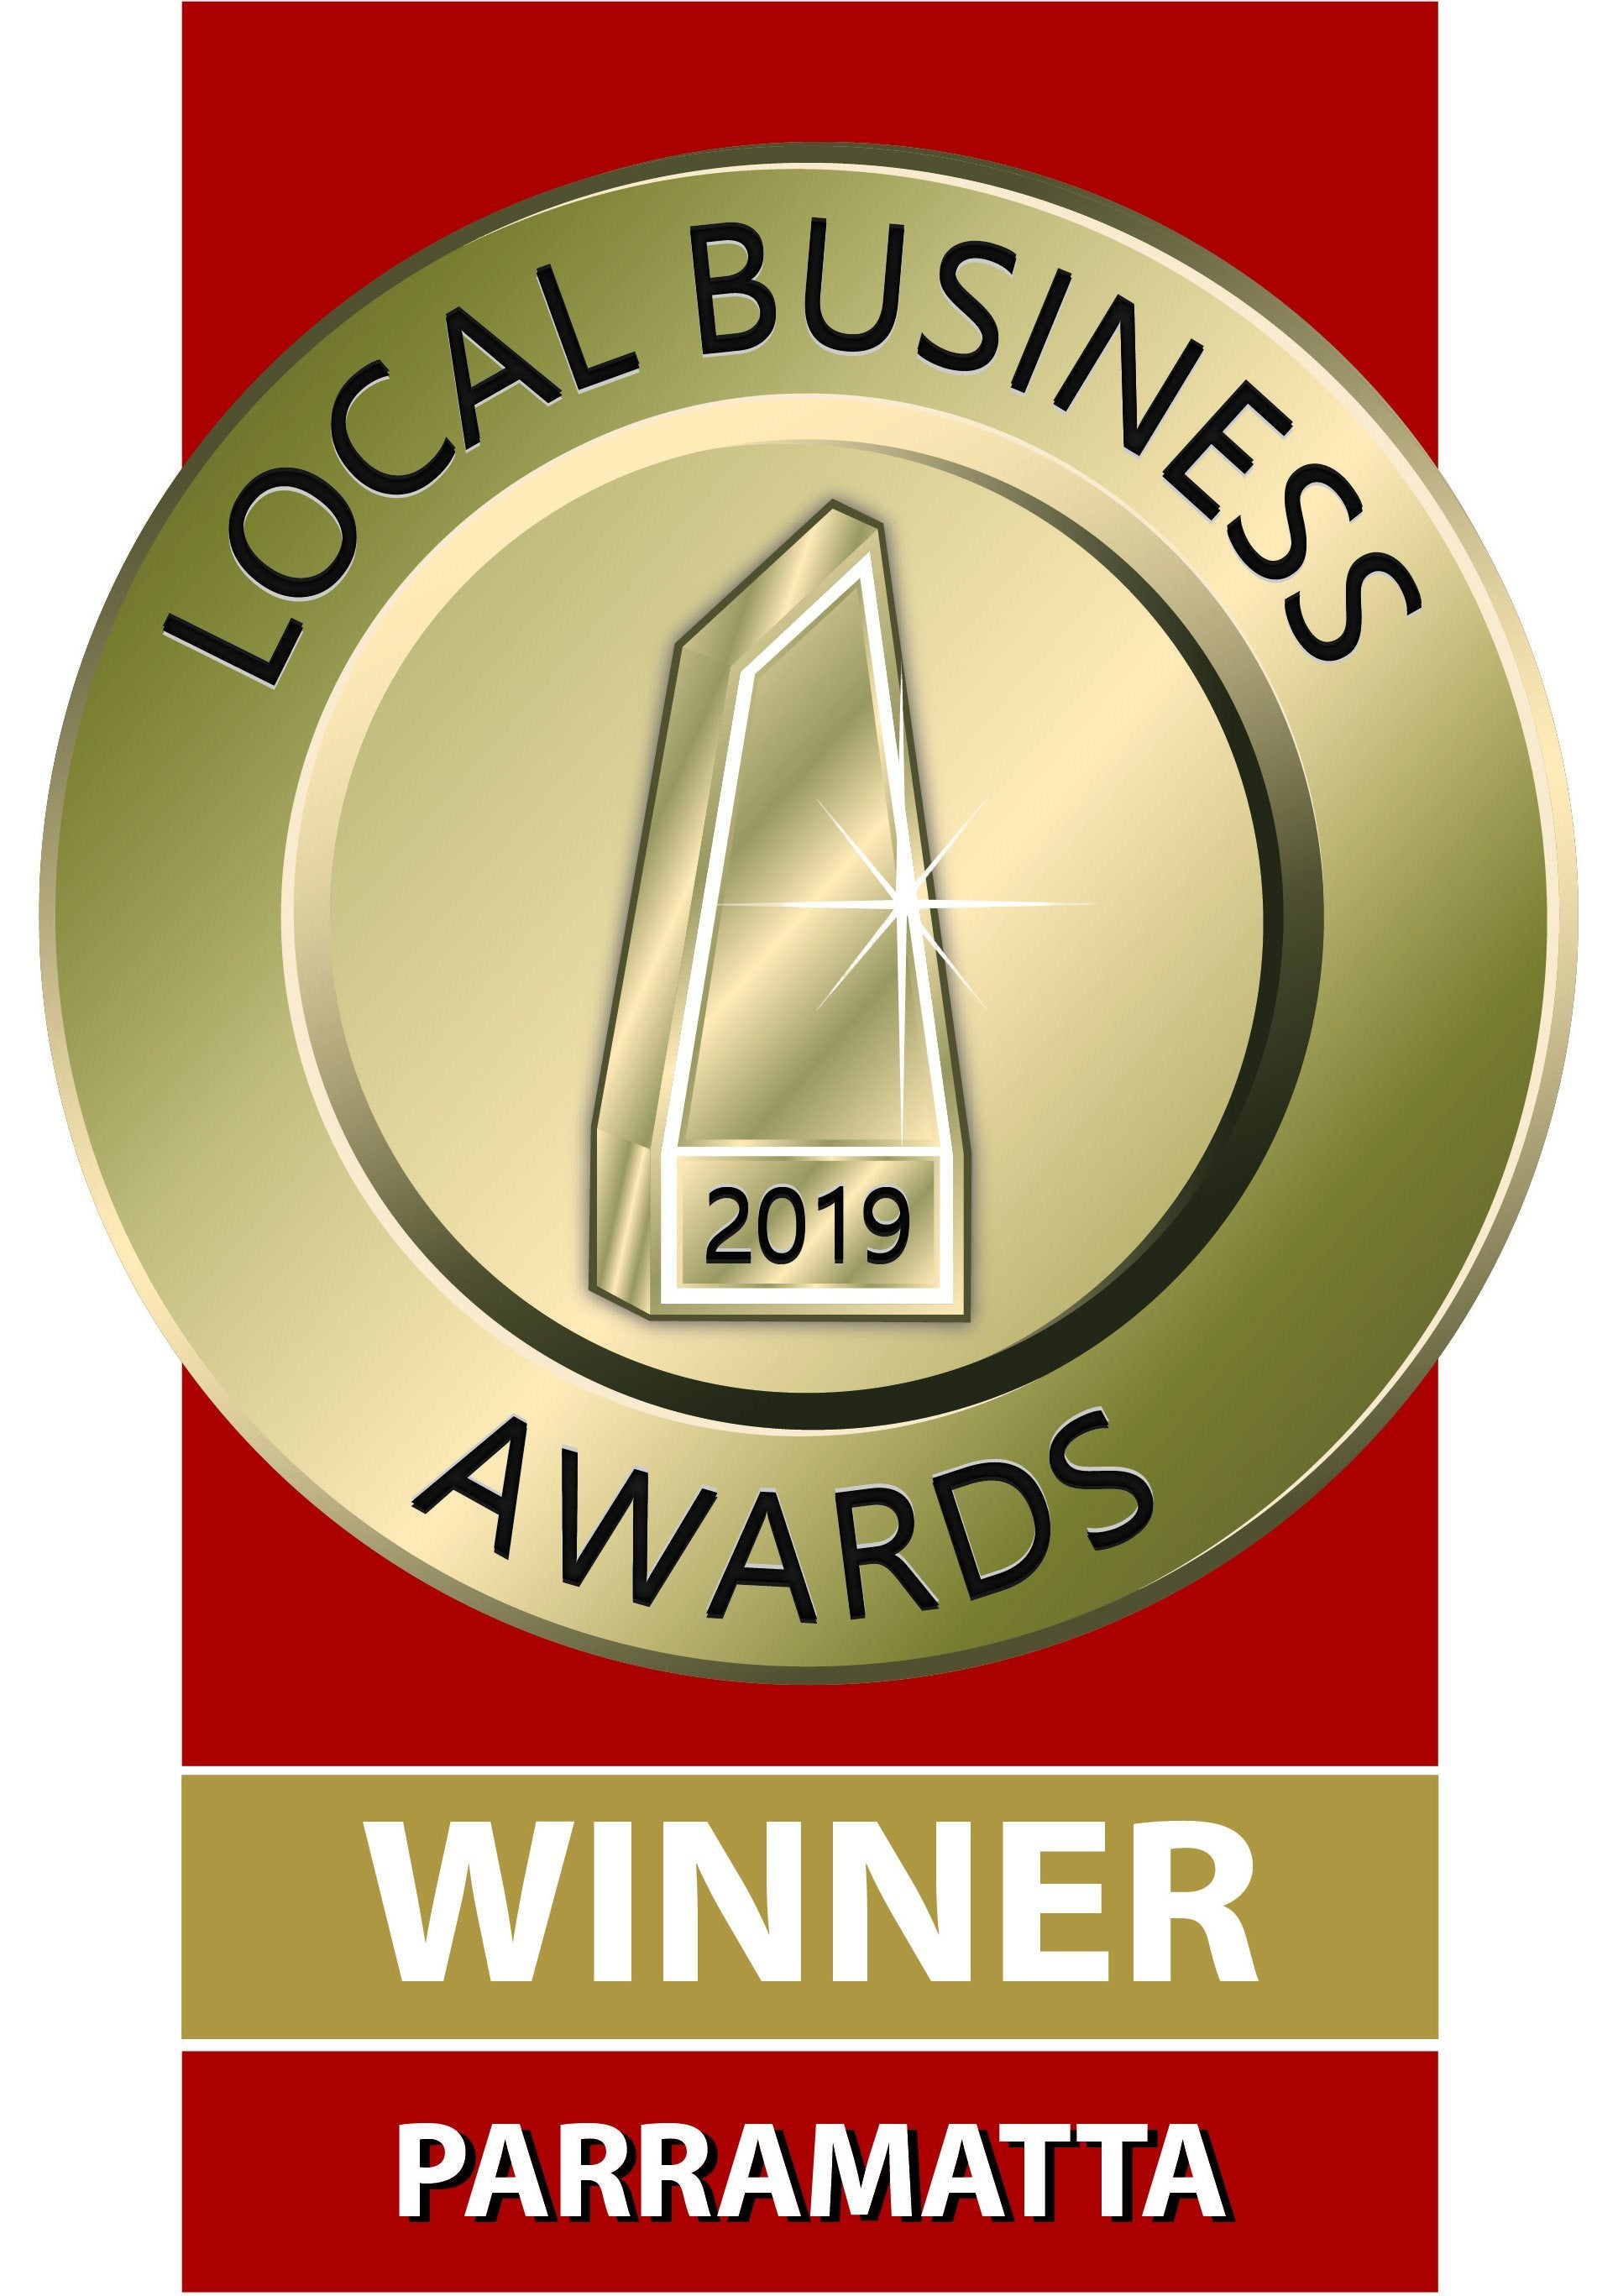 Winner of Local Business Awards 2019